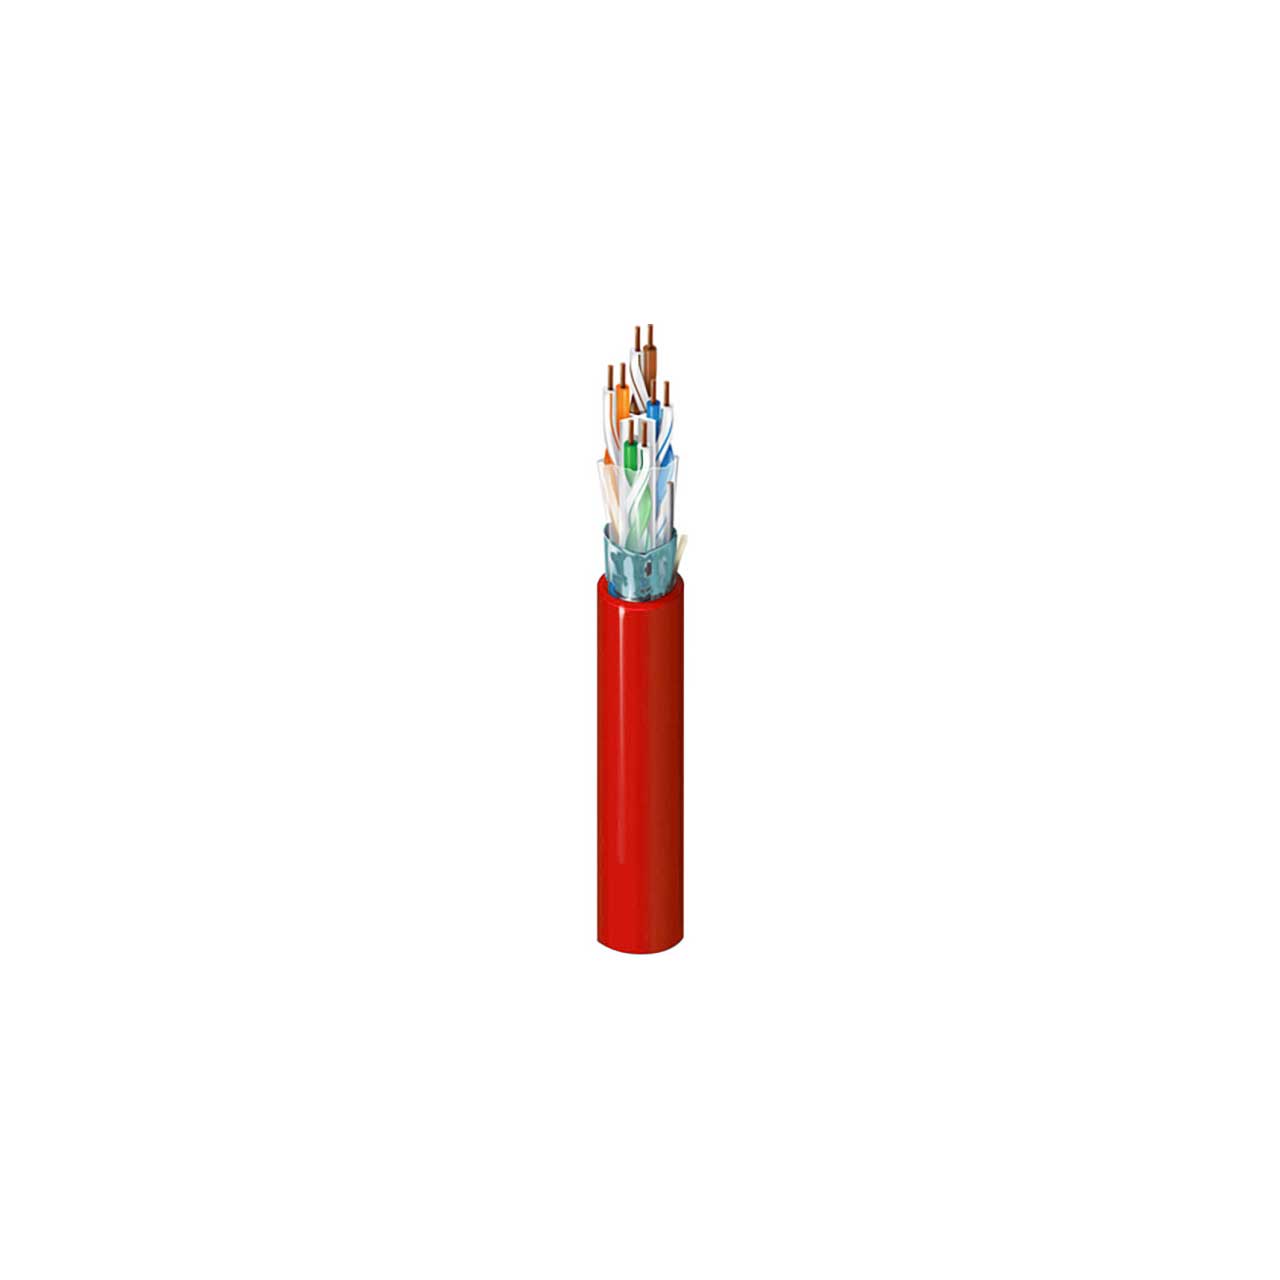 Belden 2412F CAT6 Plus Cable - 4-Pair - F/UTP-Foil Shielded - Riser-CMR - 23 AWG - Red - 1000 Foot